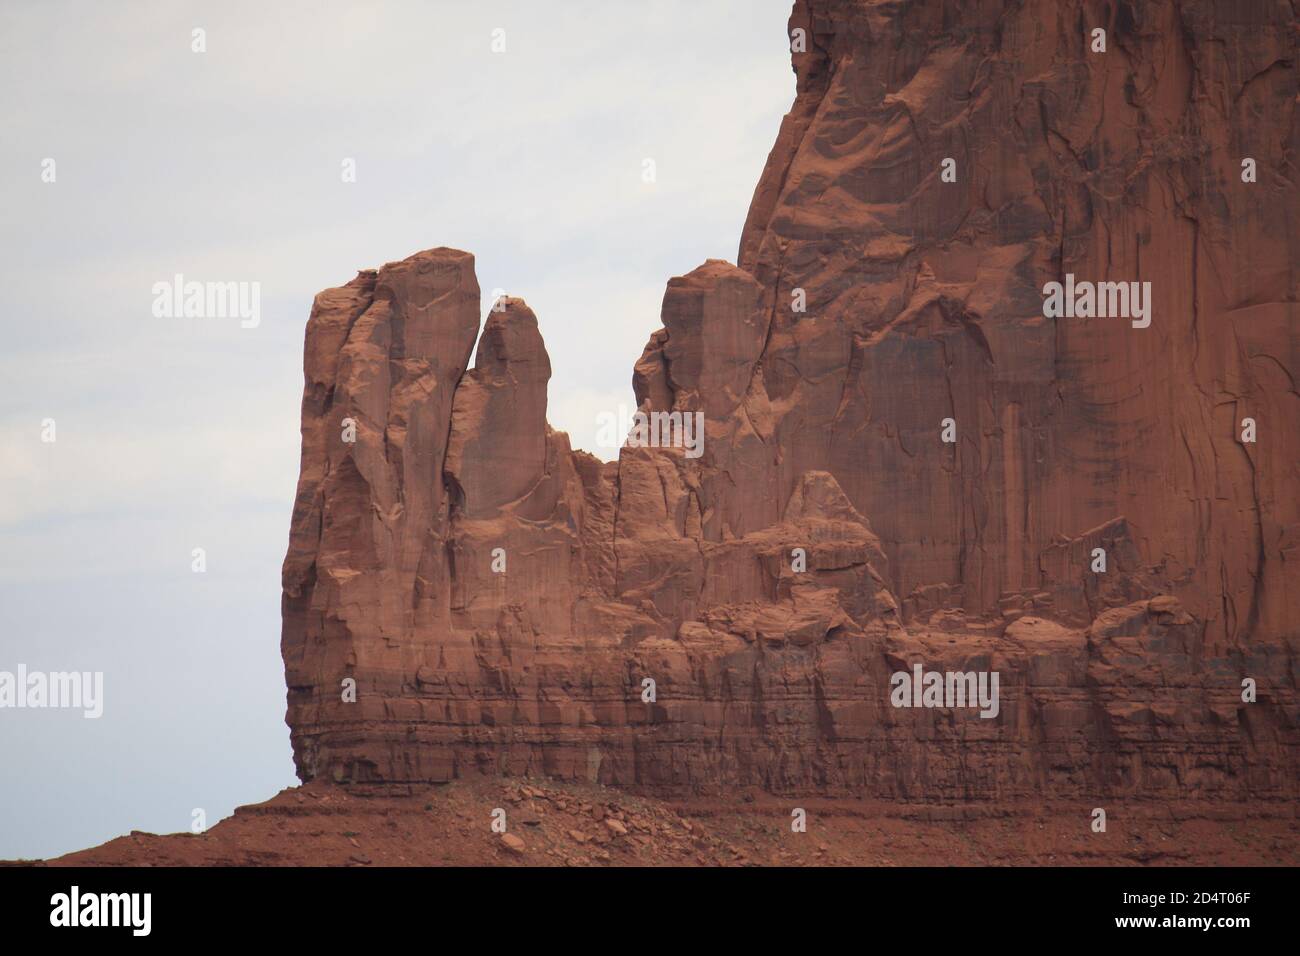 USA, Arizona, Monument Valley Tribal Park Foto Stock